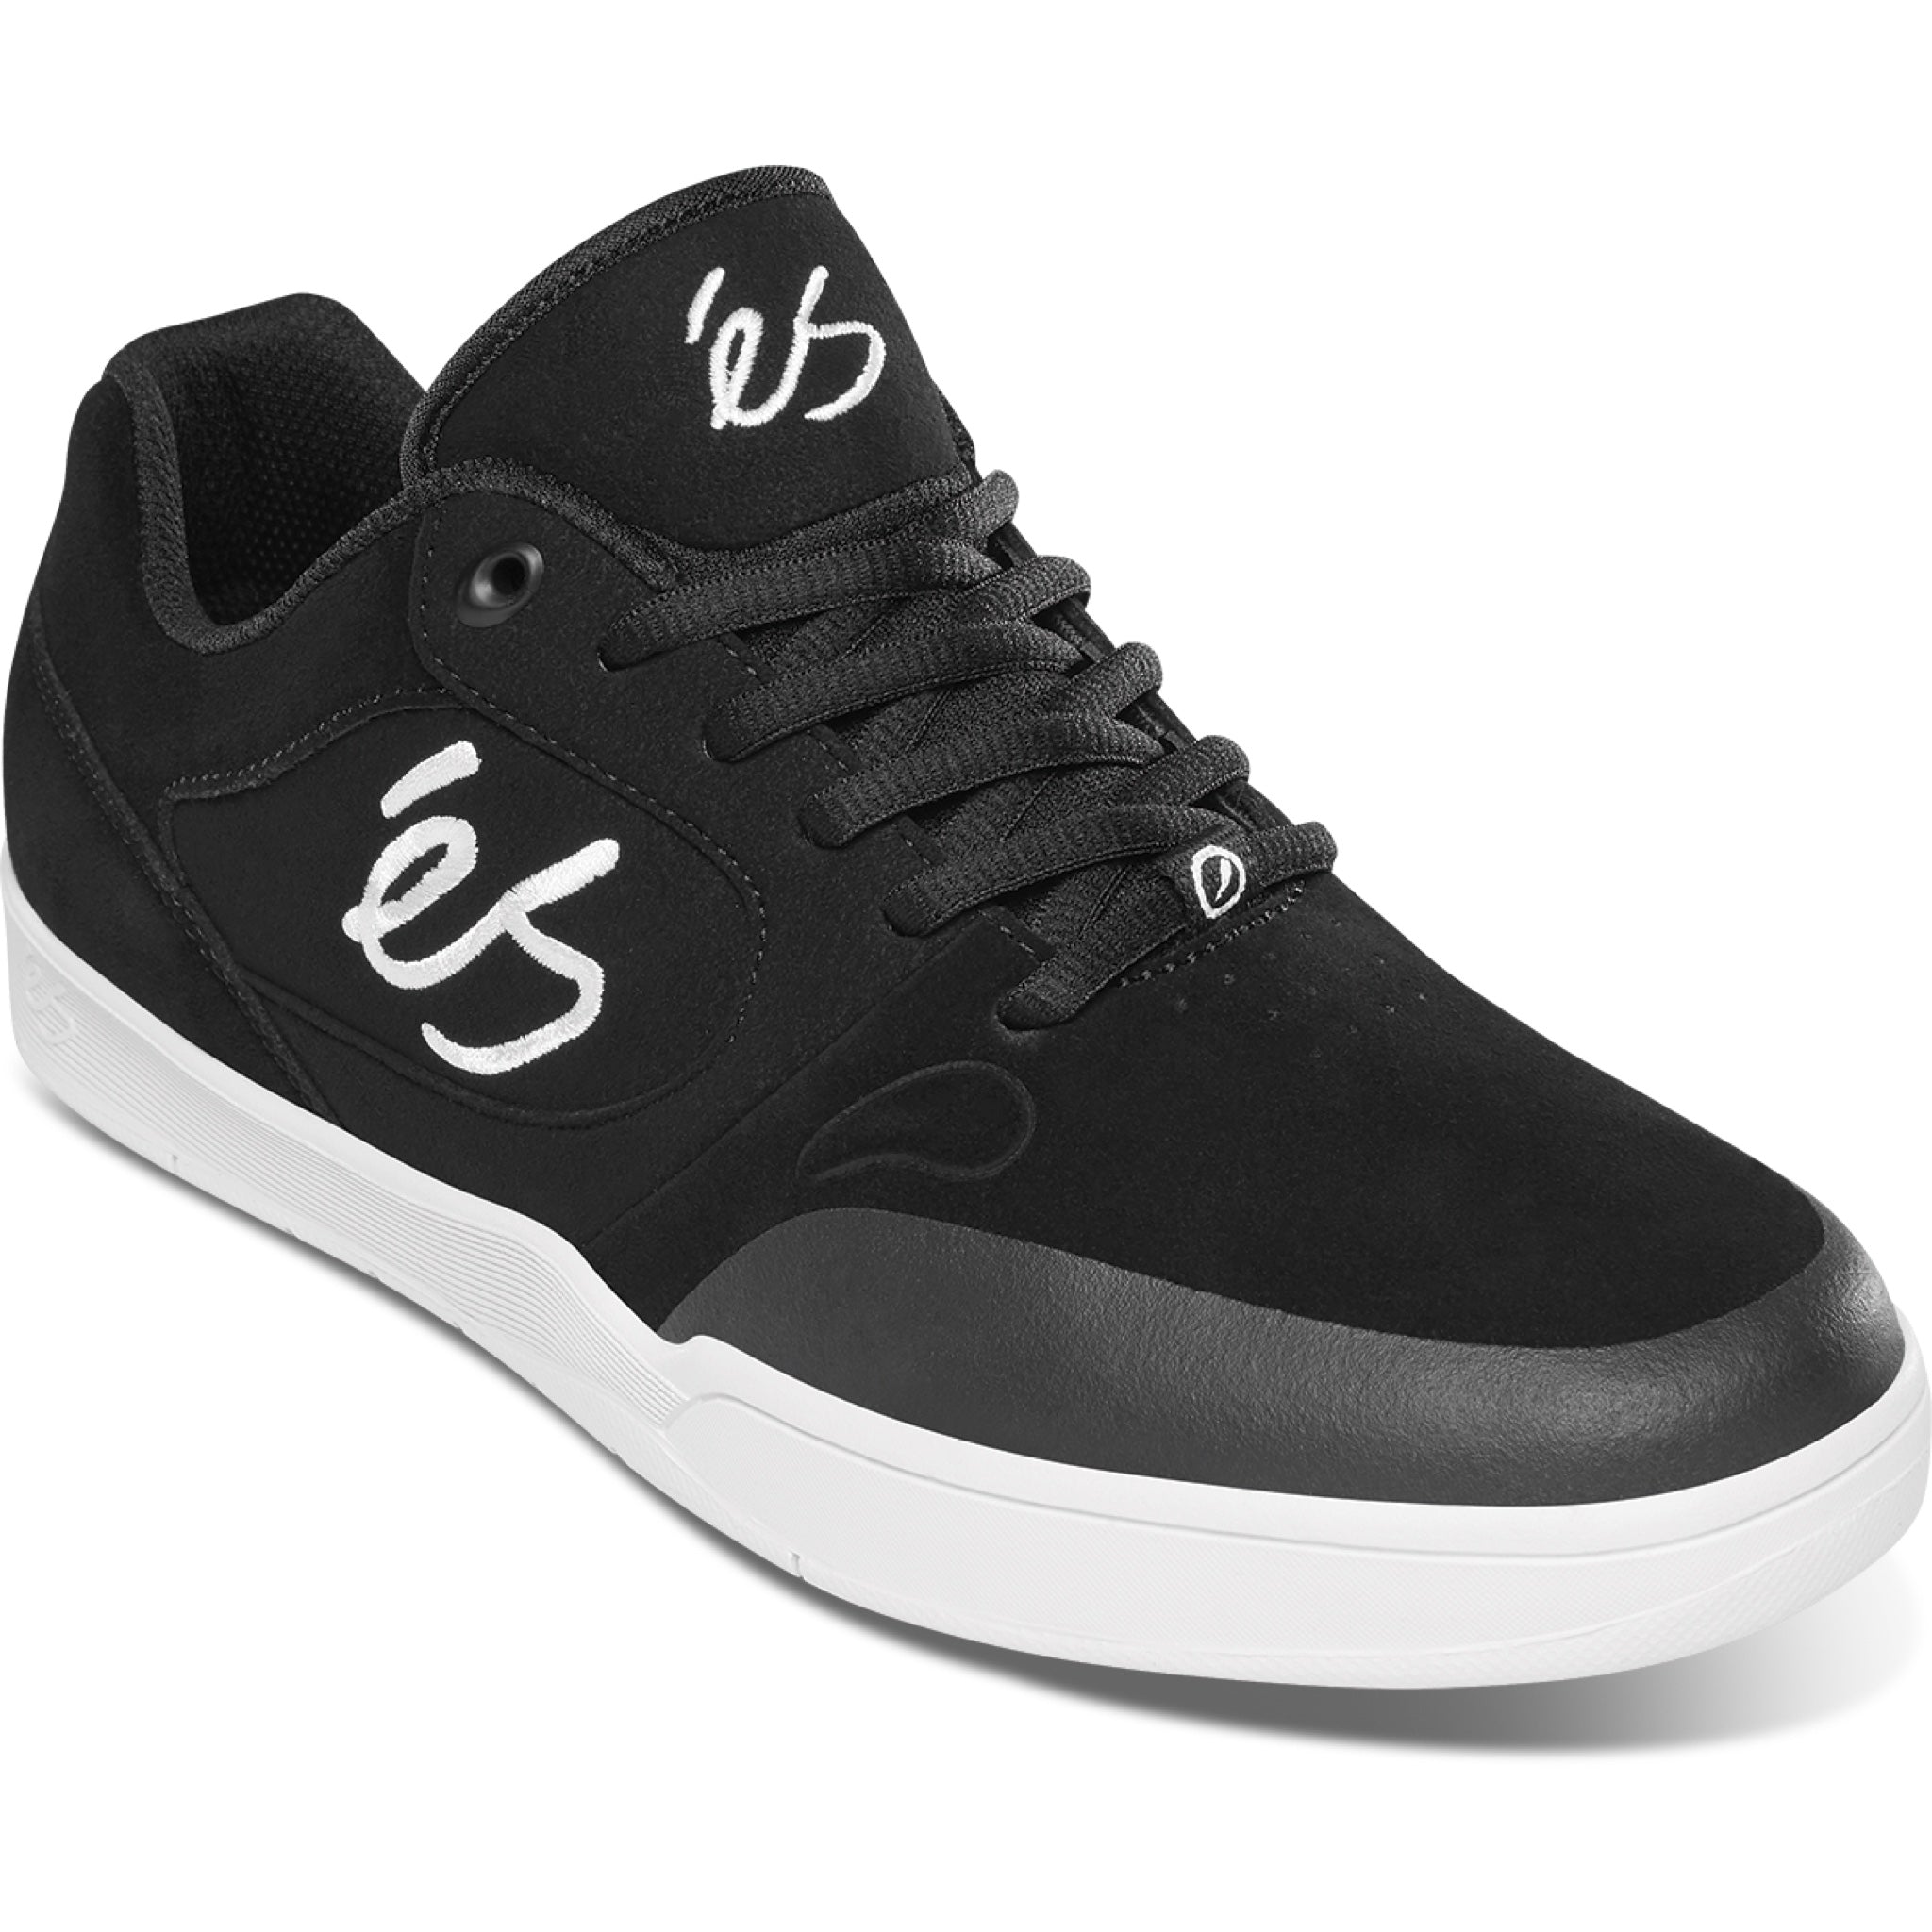 eS Swift 1.5 Skateboard Shoe - Black/White/Gum